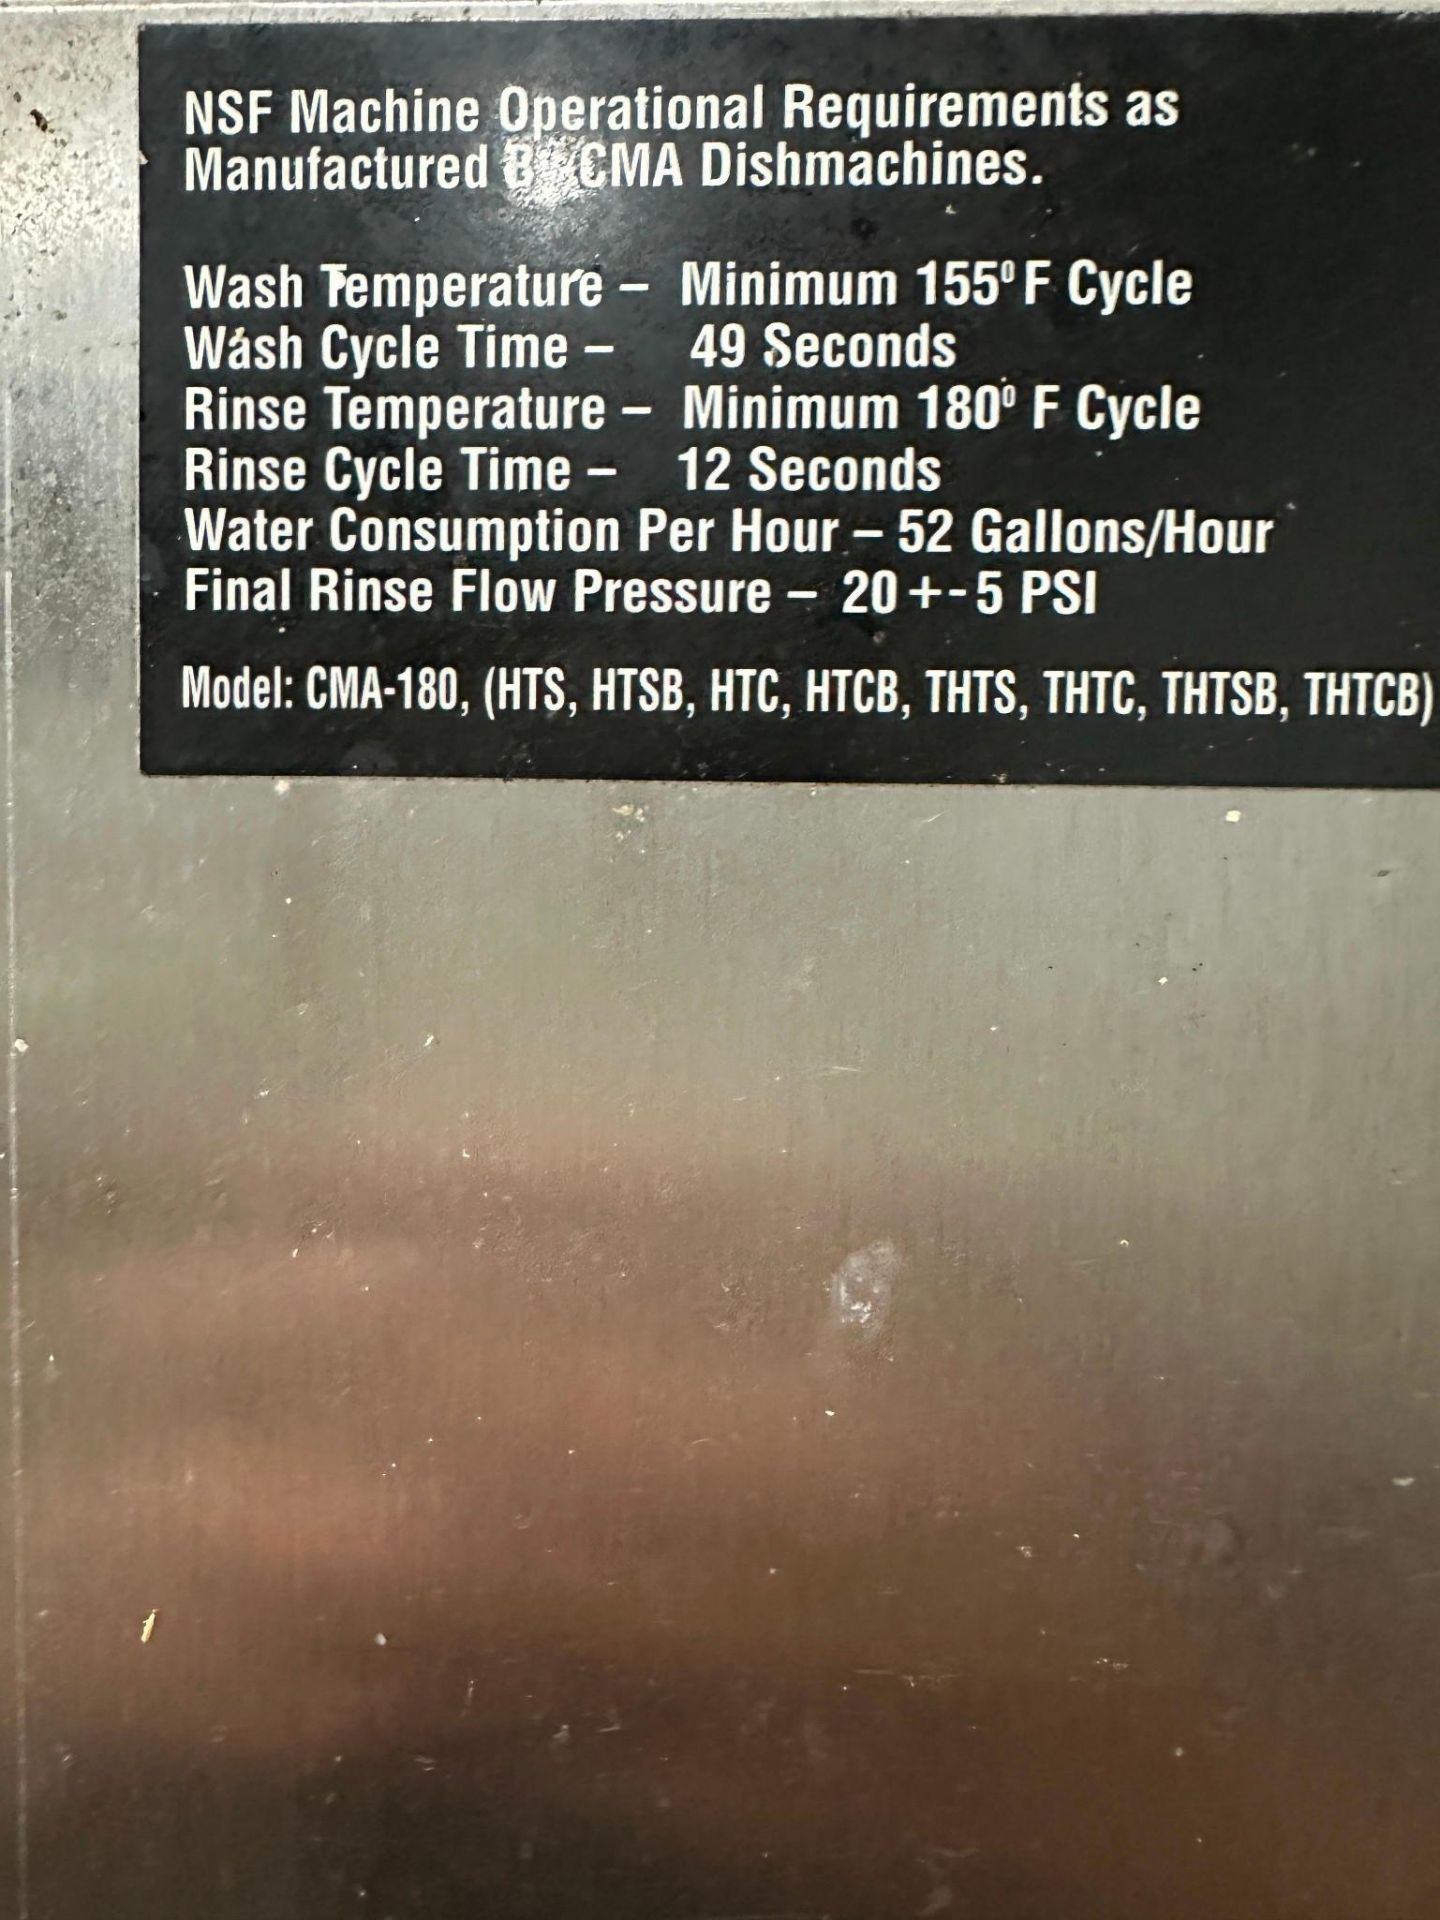 CMA HTCB UPRIGHT HIGH TEMPERATURE DISHWASHER - Image 8 of 8